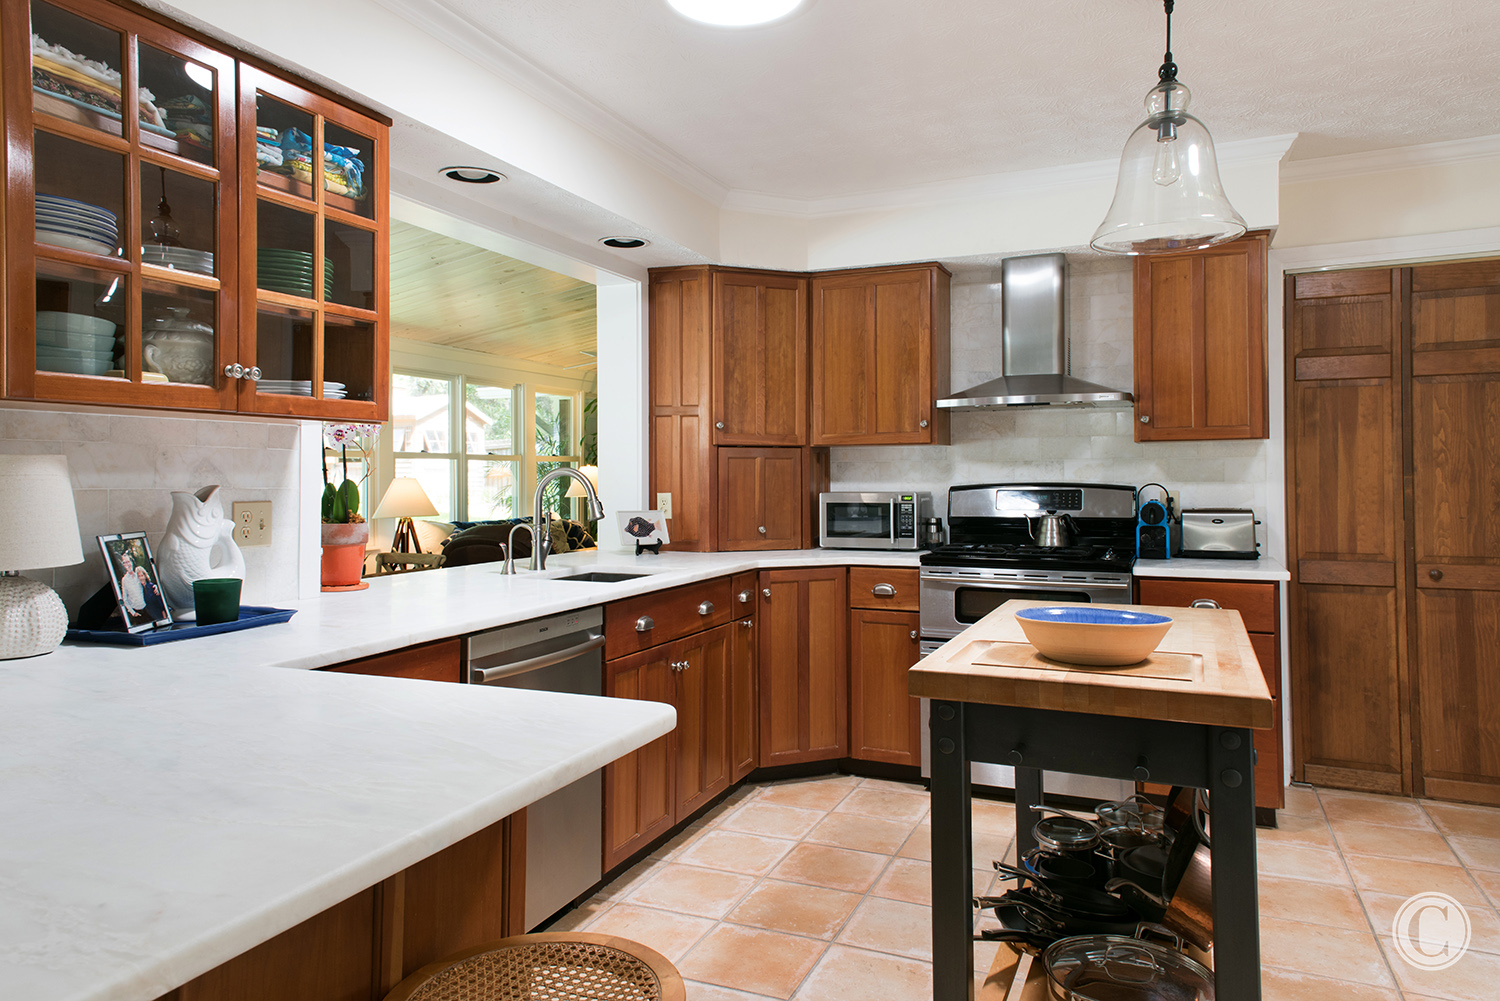 Kitchen Upgrades Passthrough, Gorgeous Honed Marble Counter, Atlantic Beach, Florida Home Renovation, ©Agnes Lopez Photography